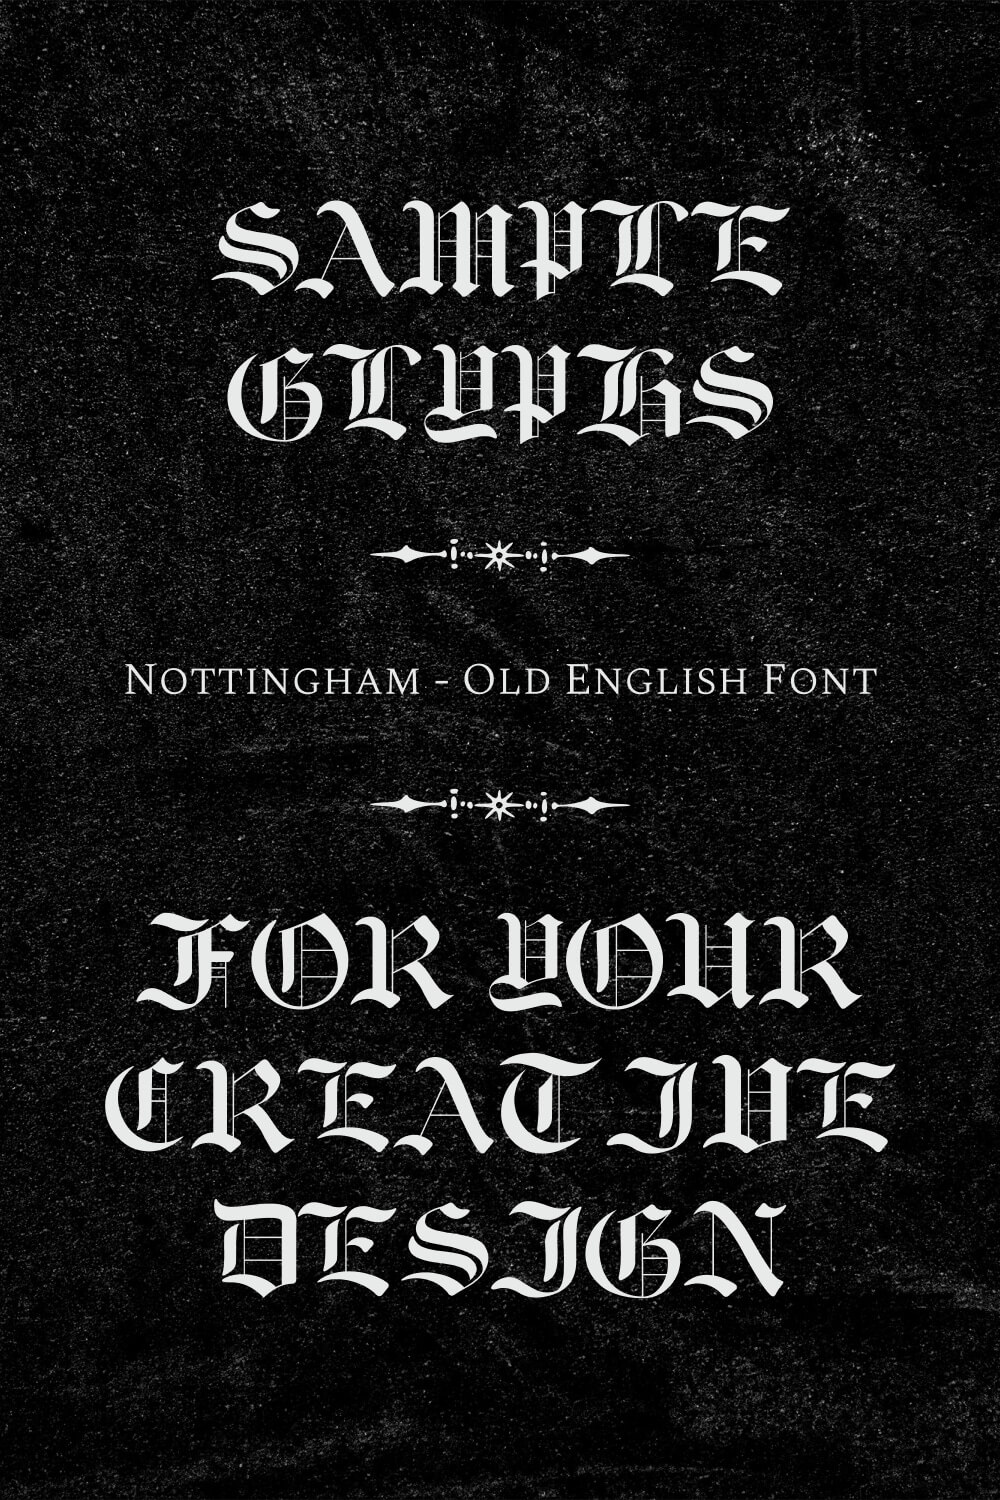 Nottingham Old English Font pinterest.